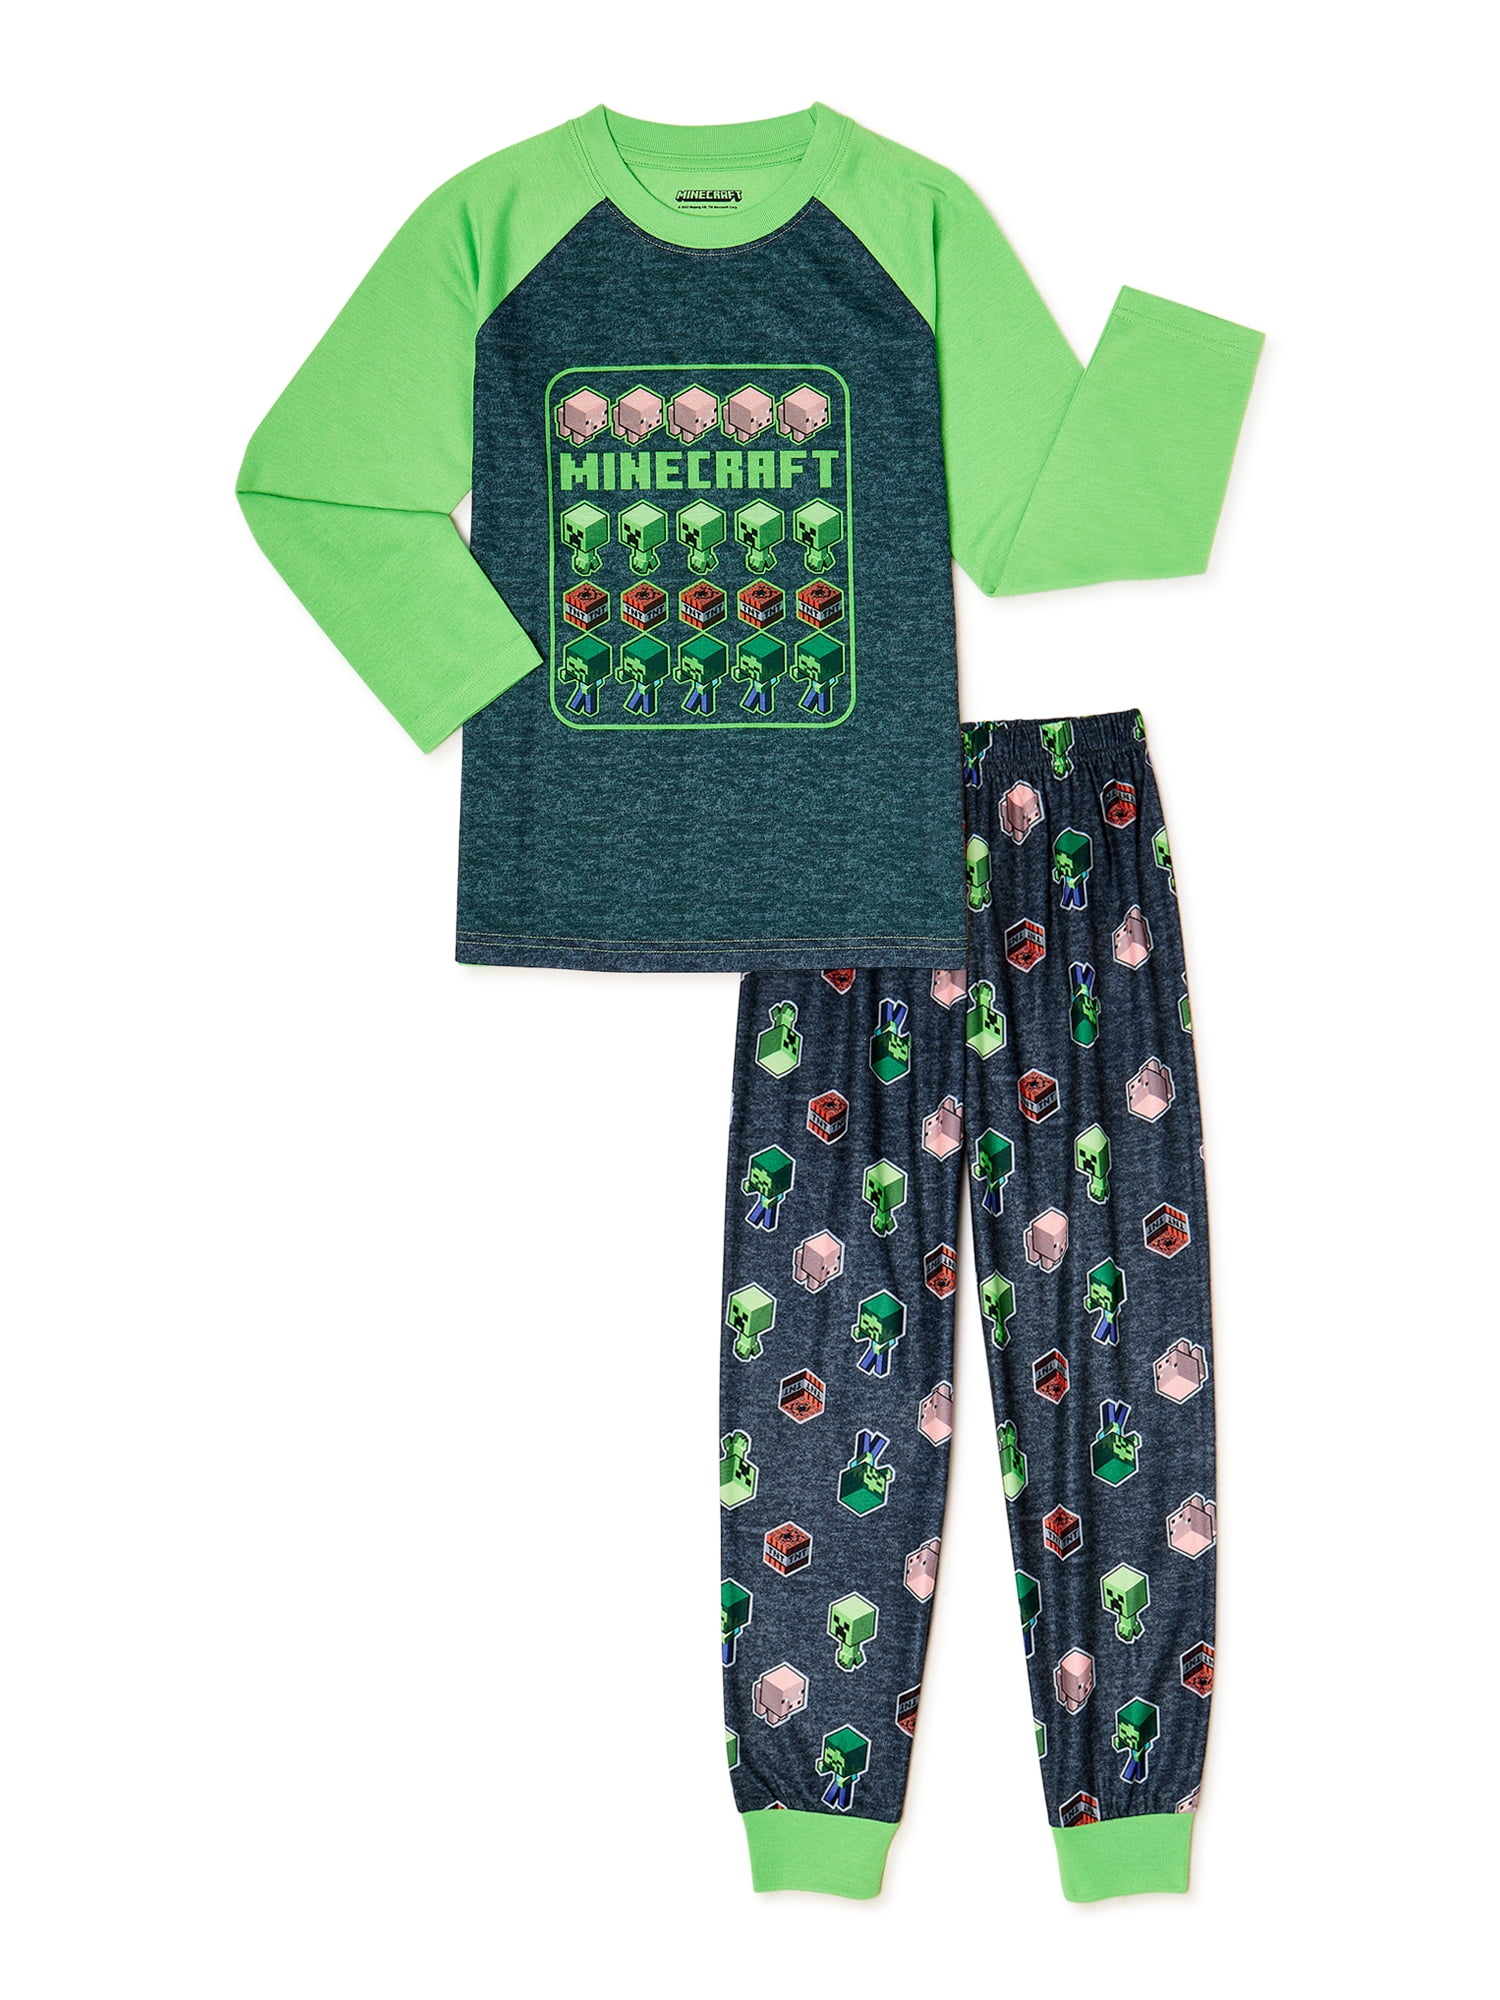 Minecraft Boys Long Sleeve Top and Pants, 2-Piece Pajamas Set, Sizes 4-16